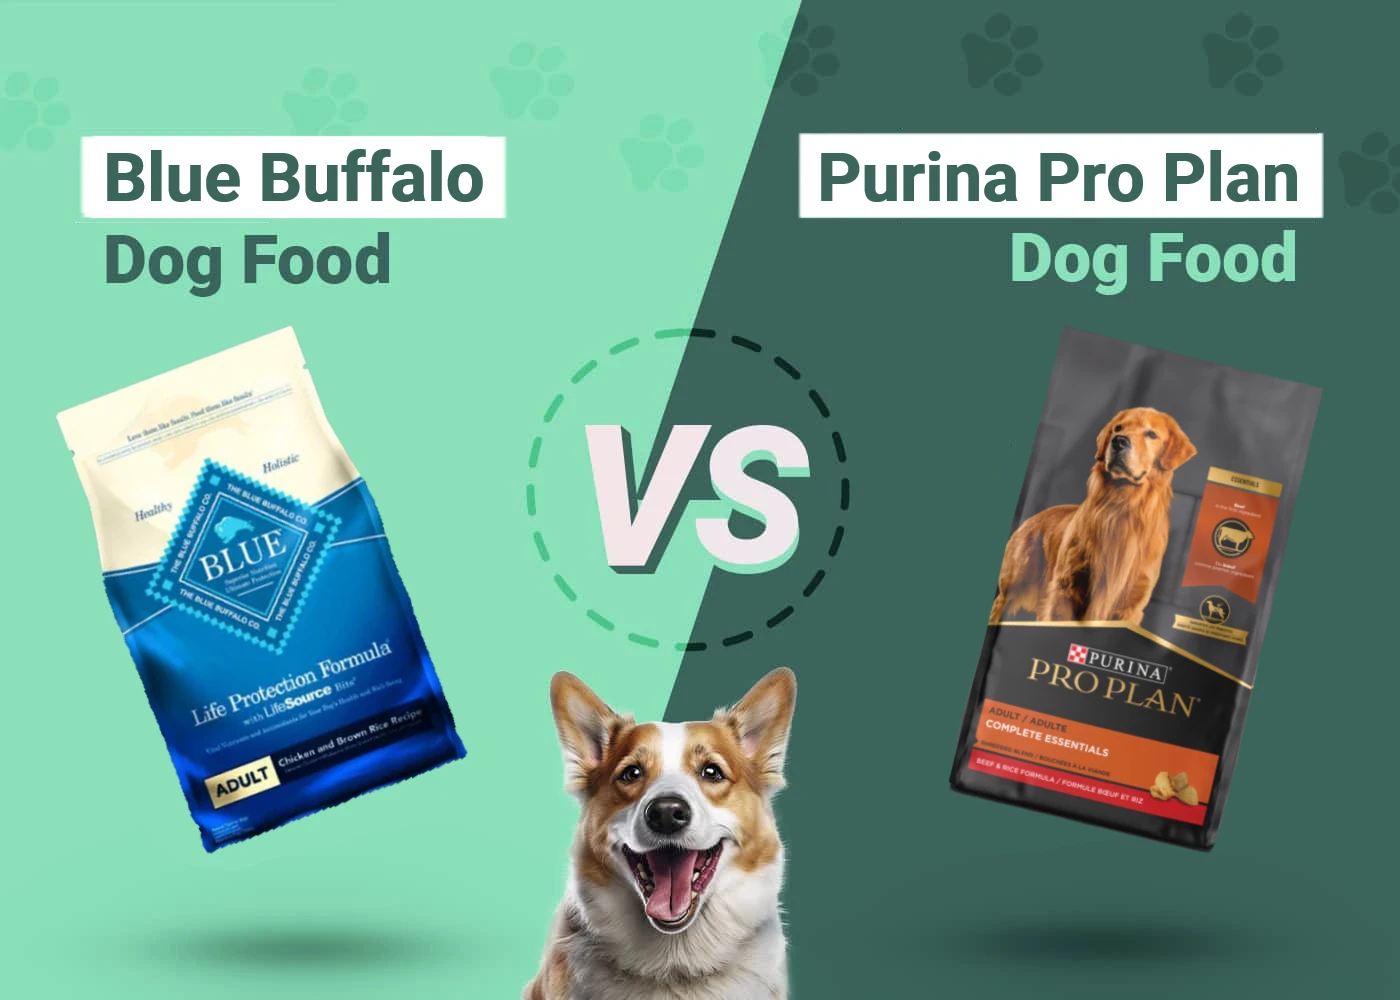 Blue Buffalo vs Purina Pro Plan - Featured Image